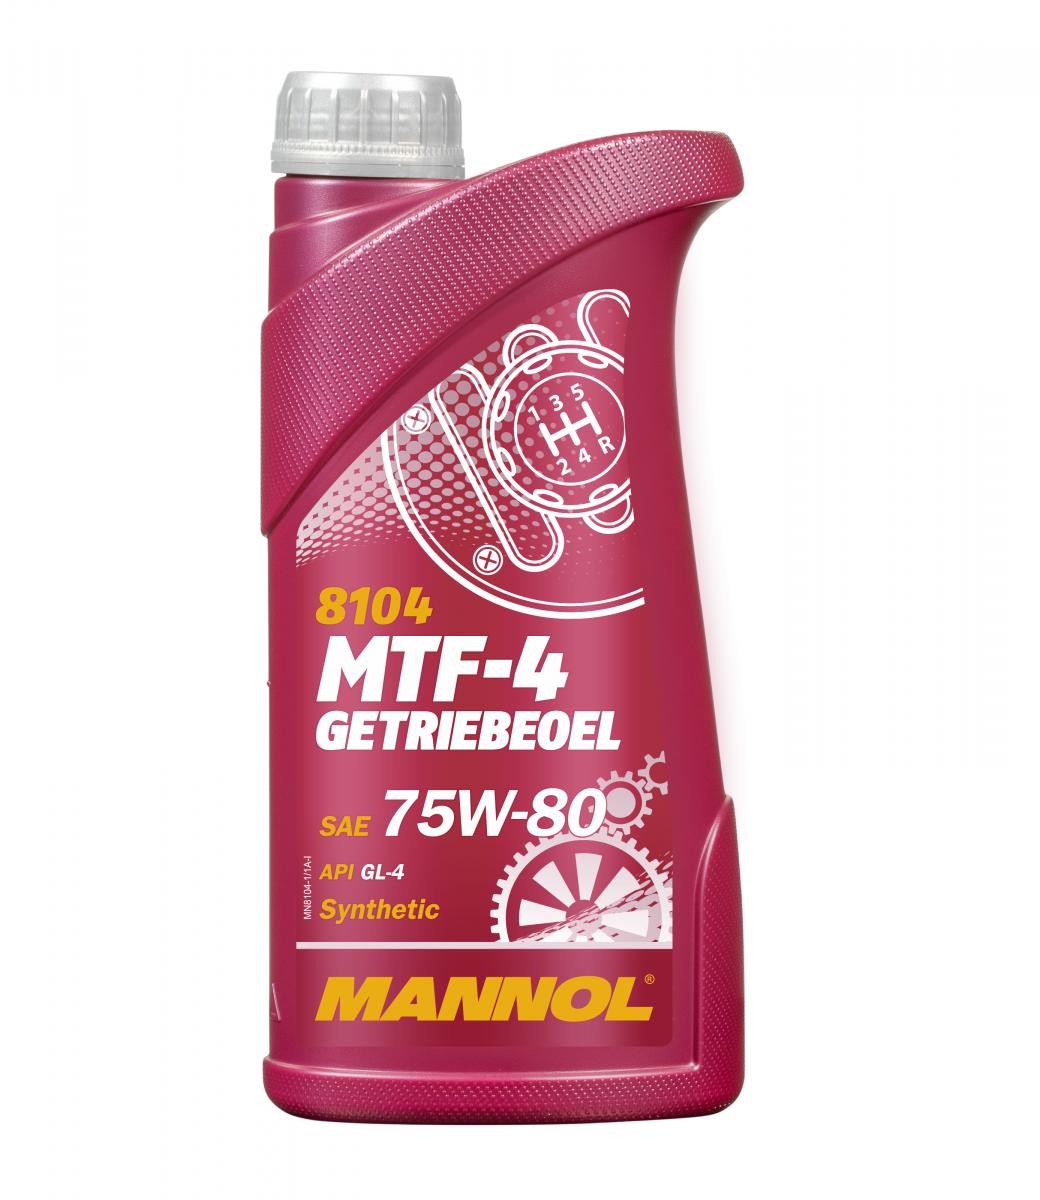 MANNOL MTF-4, GL-4 MN8104-1 ECM Getriebeöl Motorrad zum günstigen Preis